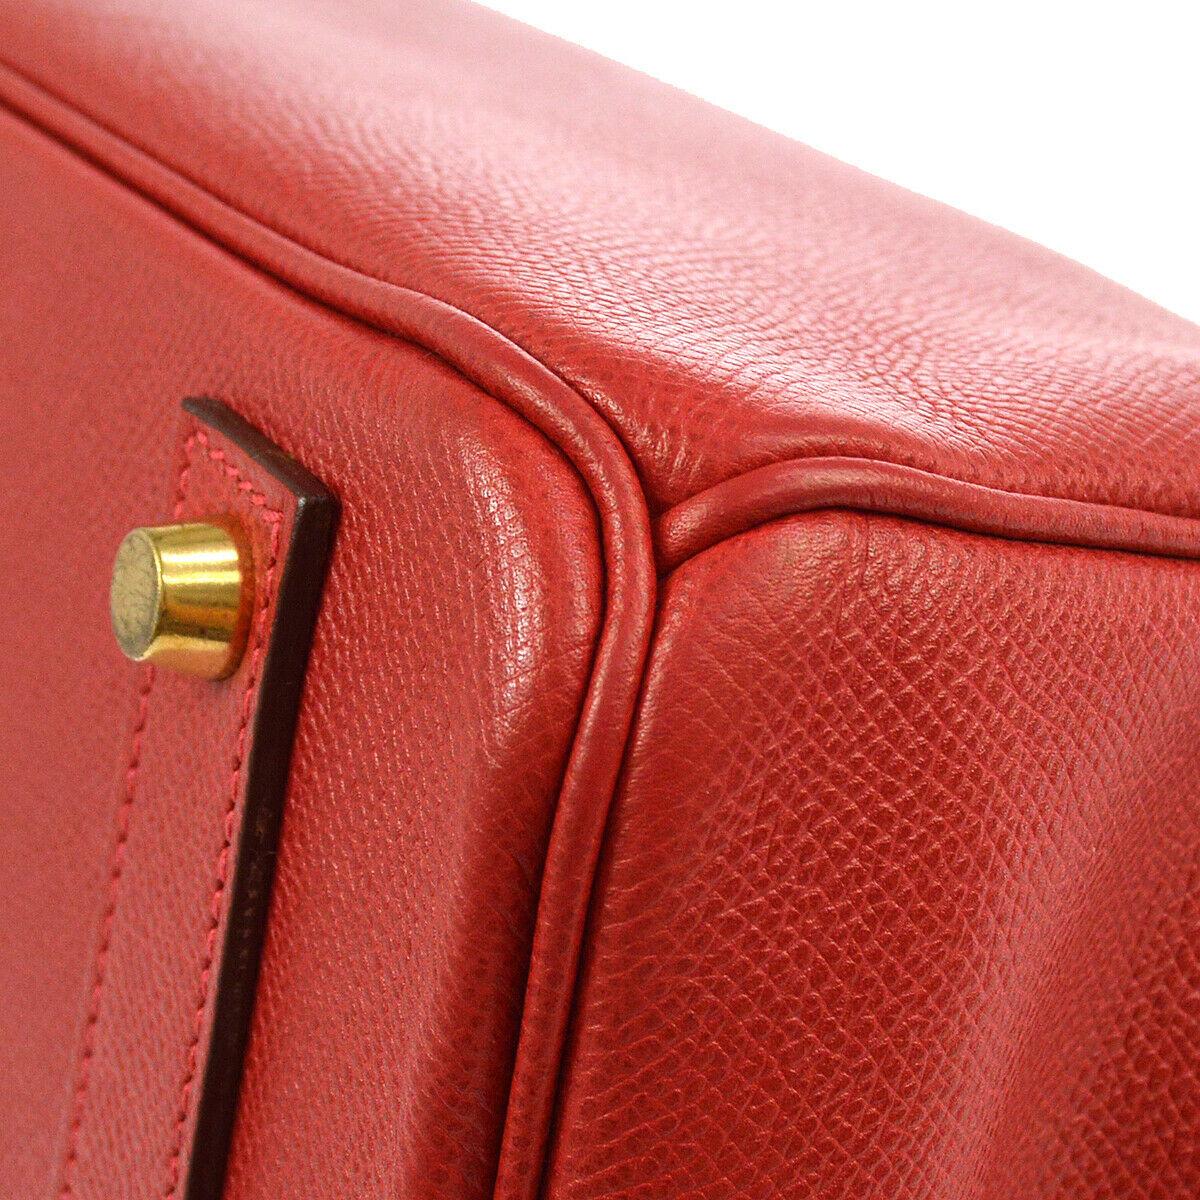 Hermes Birkin 40 Red Leather Gold Top Handle Satchel Carryall Tote Bag 1